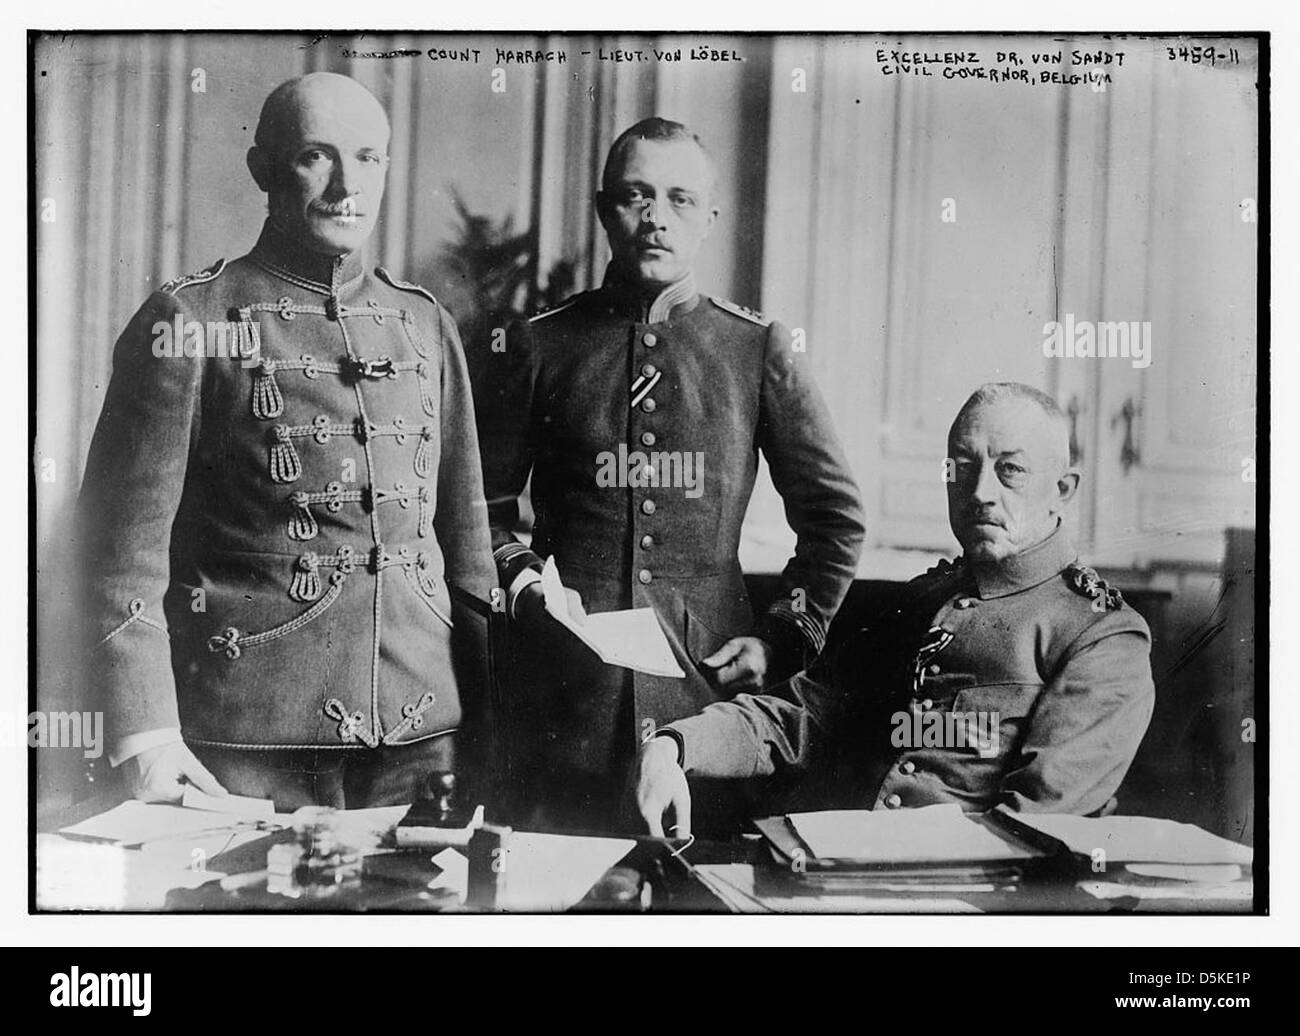 Count Harrach -- Lt. Von Lobel -- Excellenz Dr. Von Sandt, Civil Governor Belgium (LOC) Stock Photo